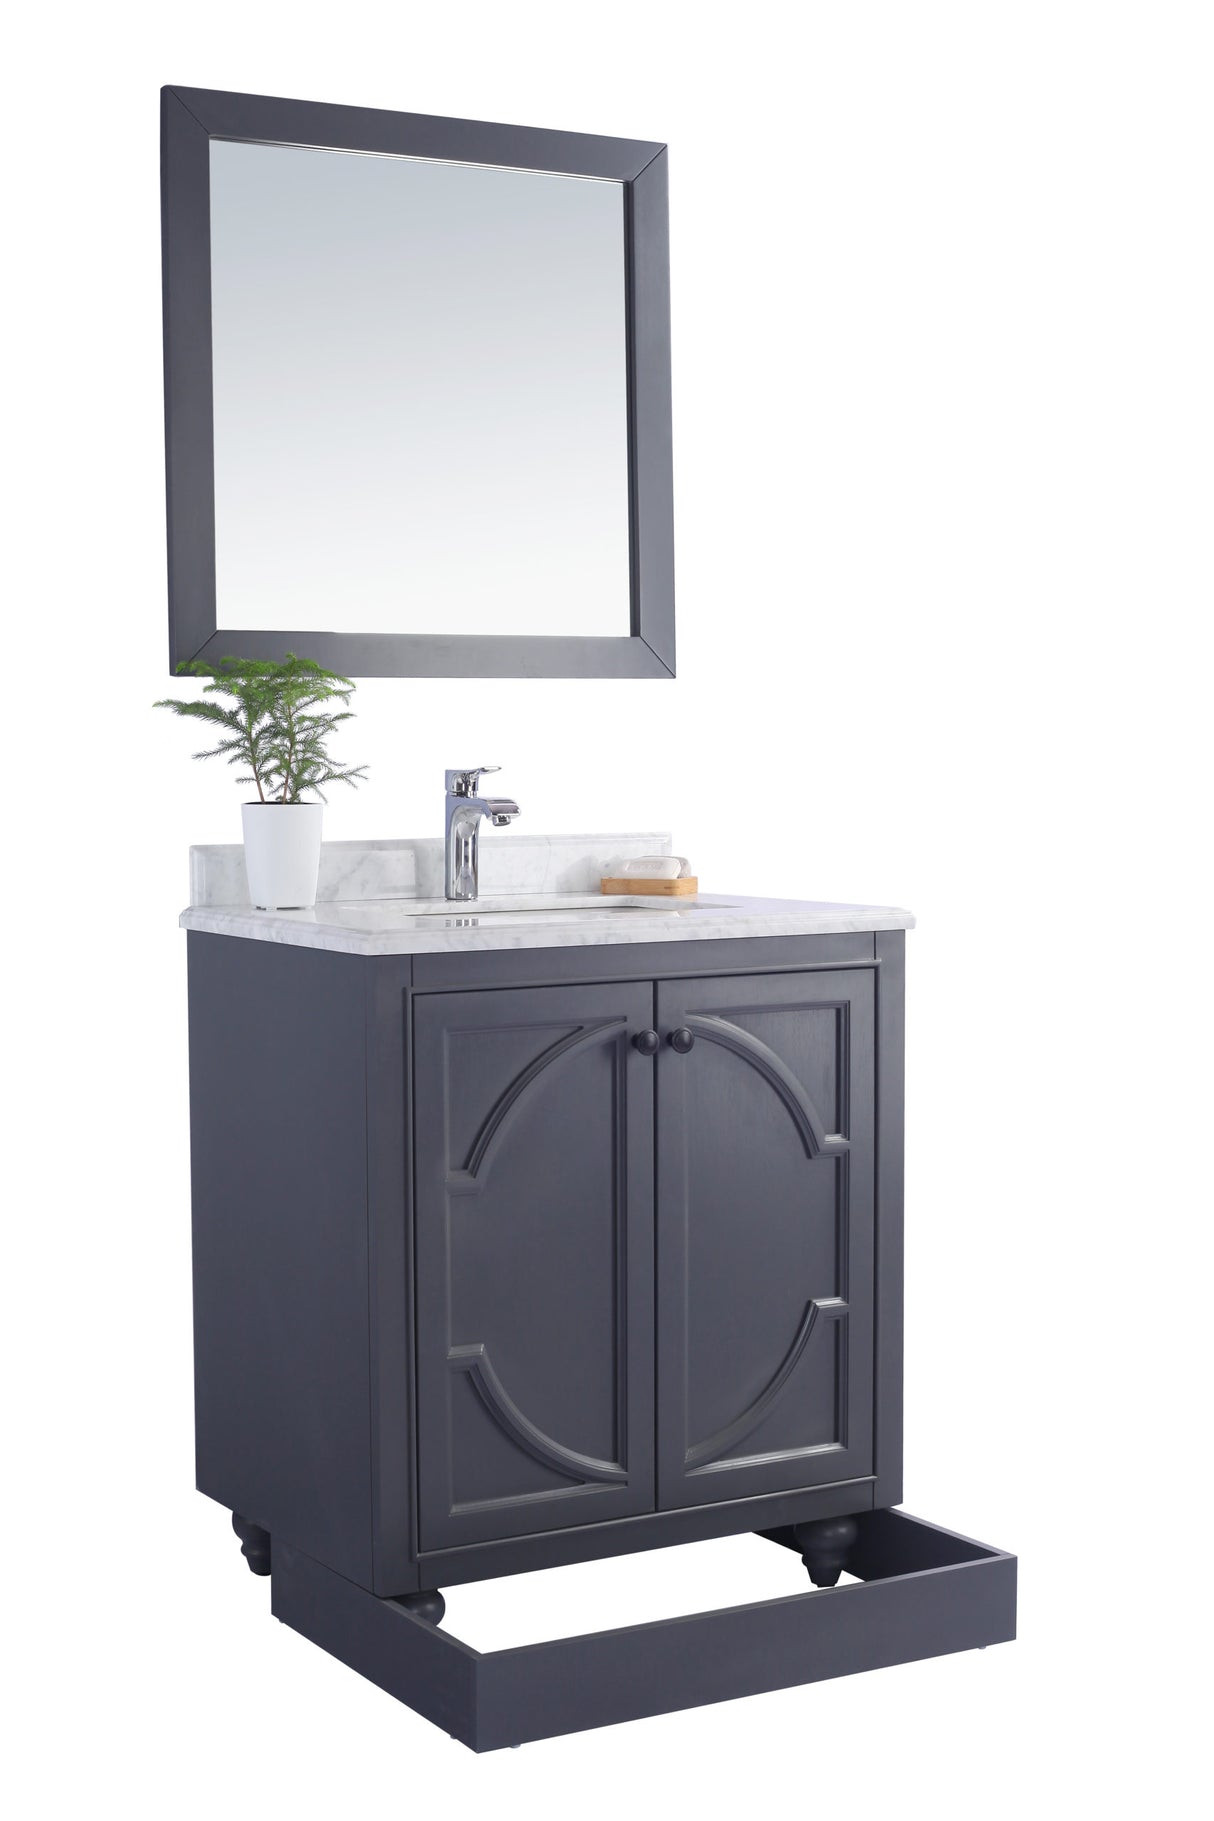 Odyssey 30" Maple Grey Bathroom Vanity with White Stripes Marble Countertop Laviva 313613-30G-WS